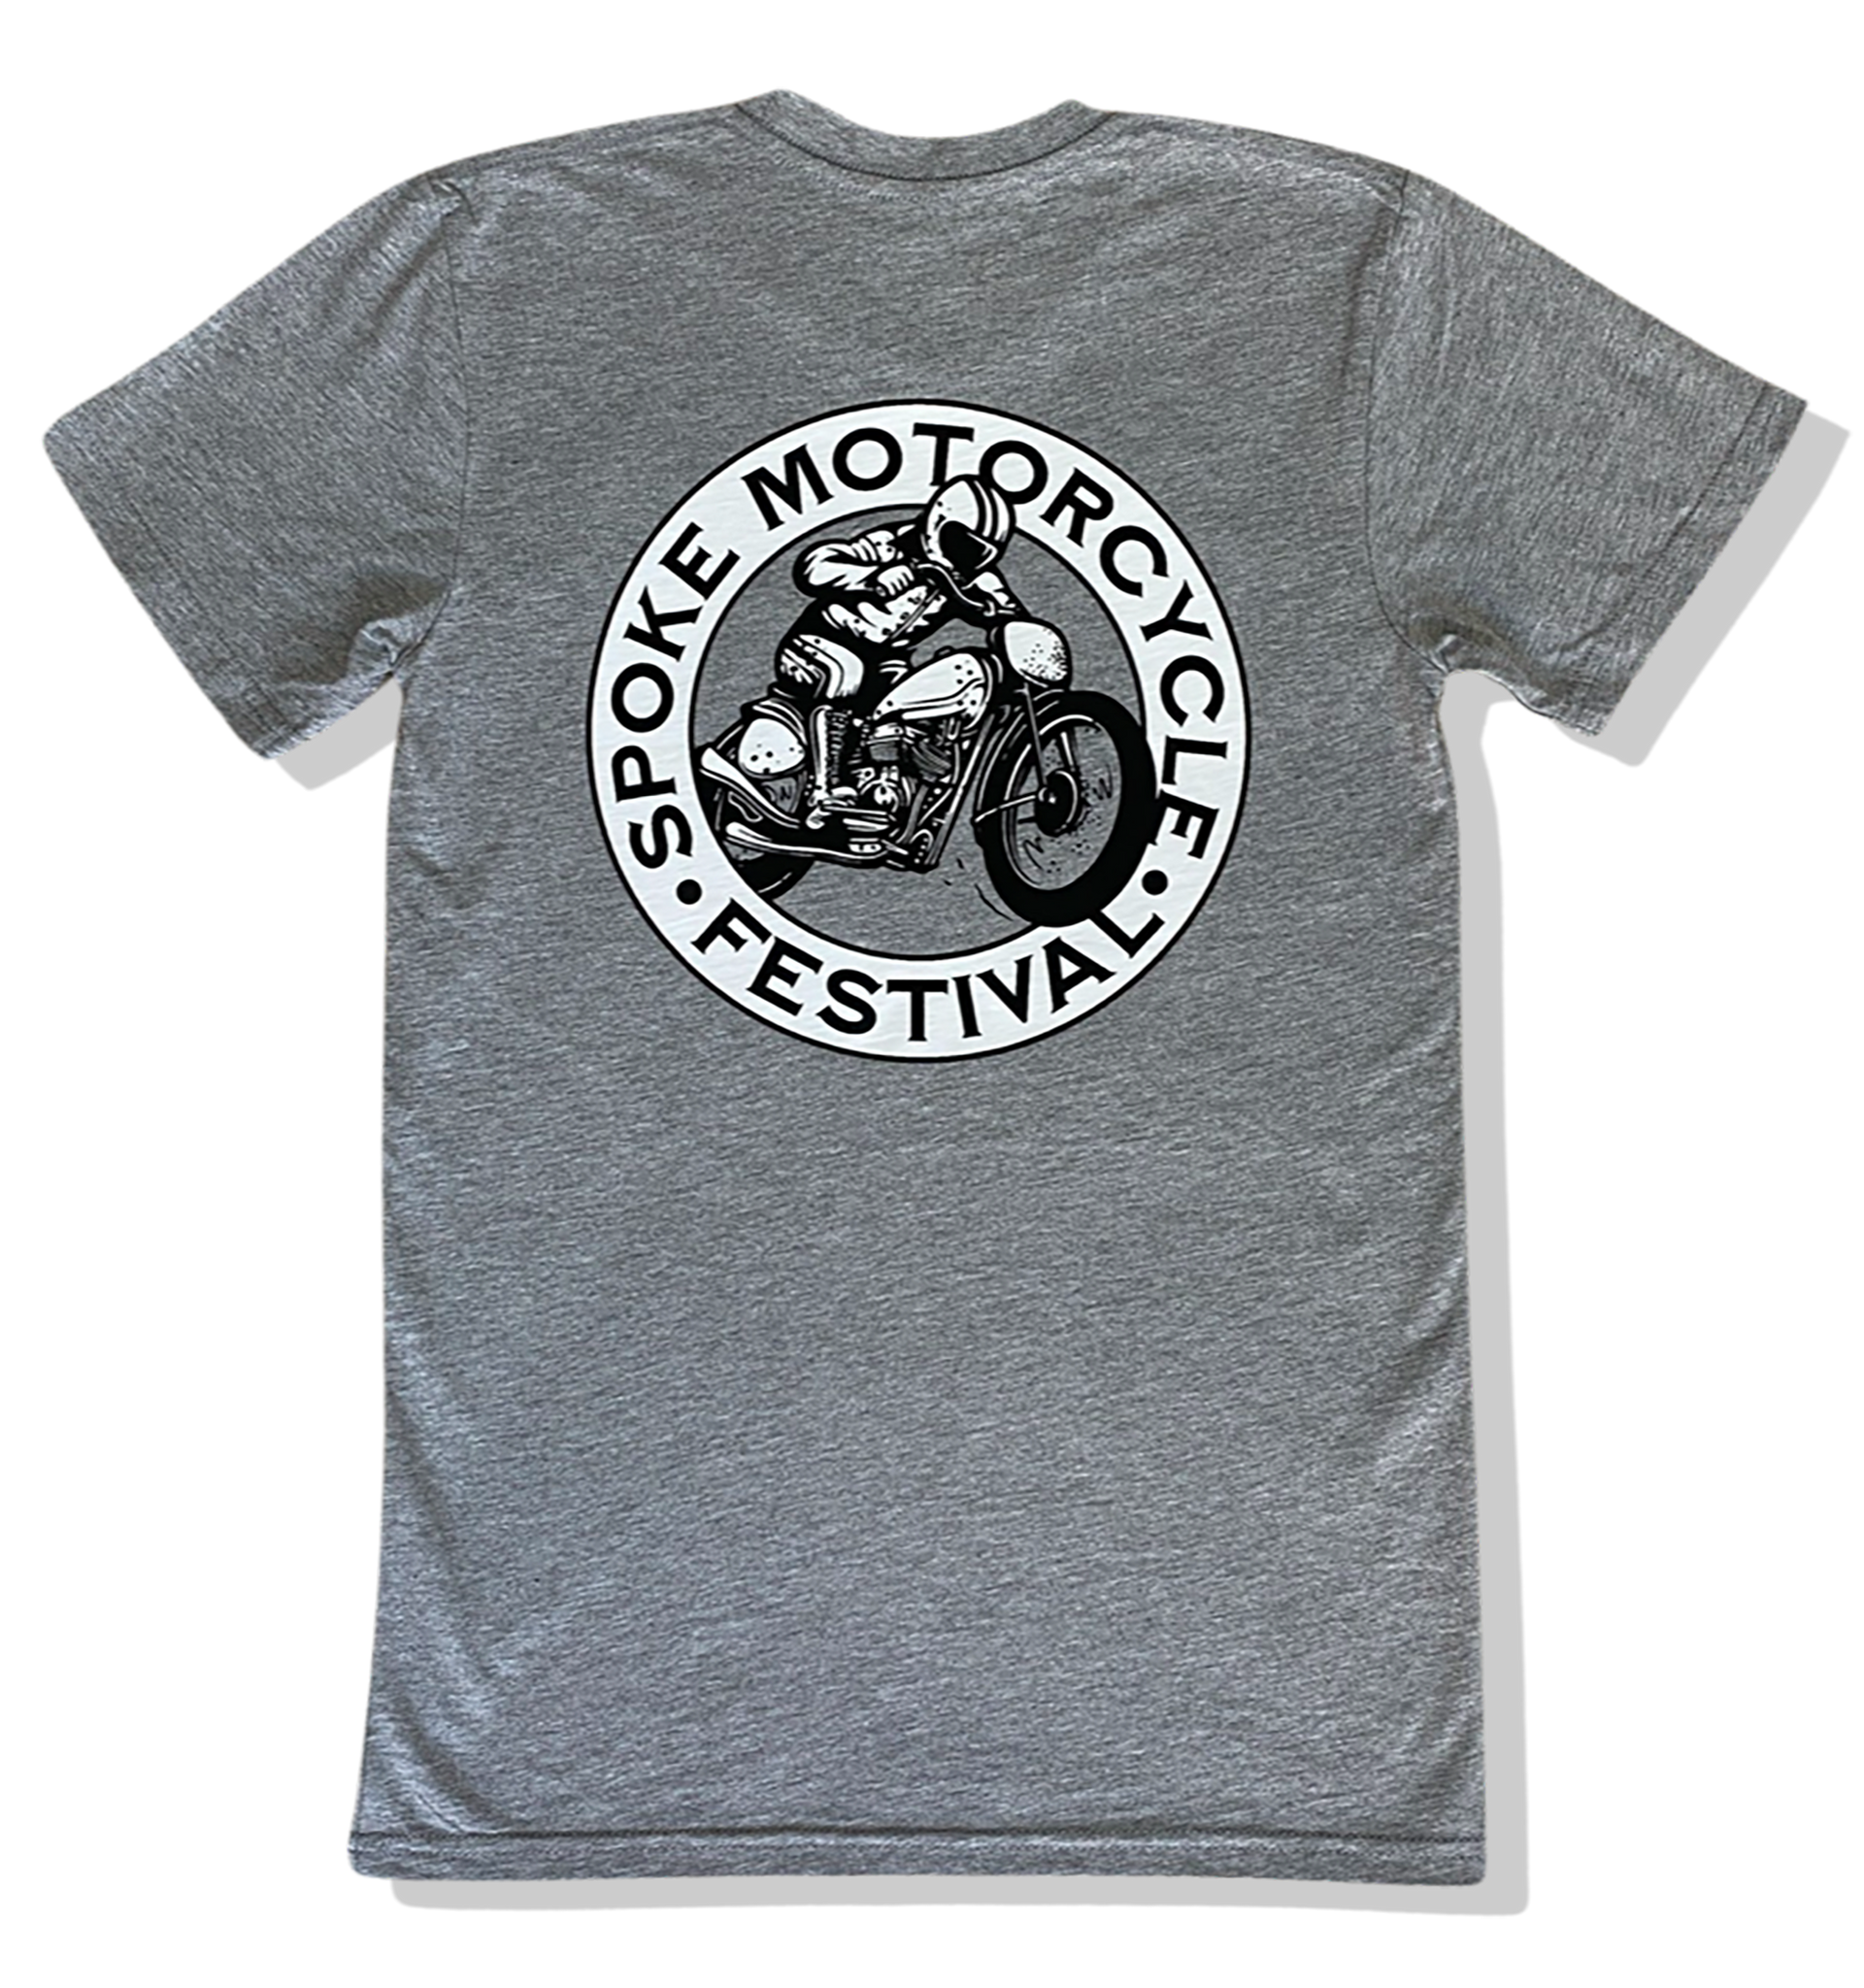 Spoke Motorcycle Festival Gray Marle T-Shirt - Retro Bike & Logo